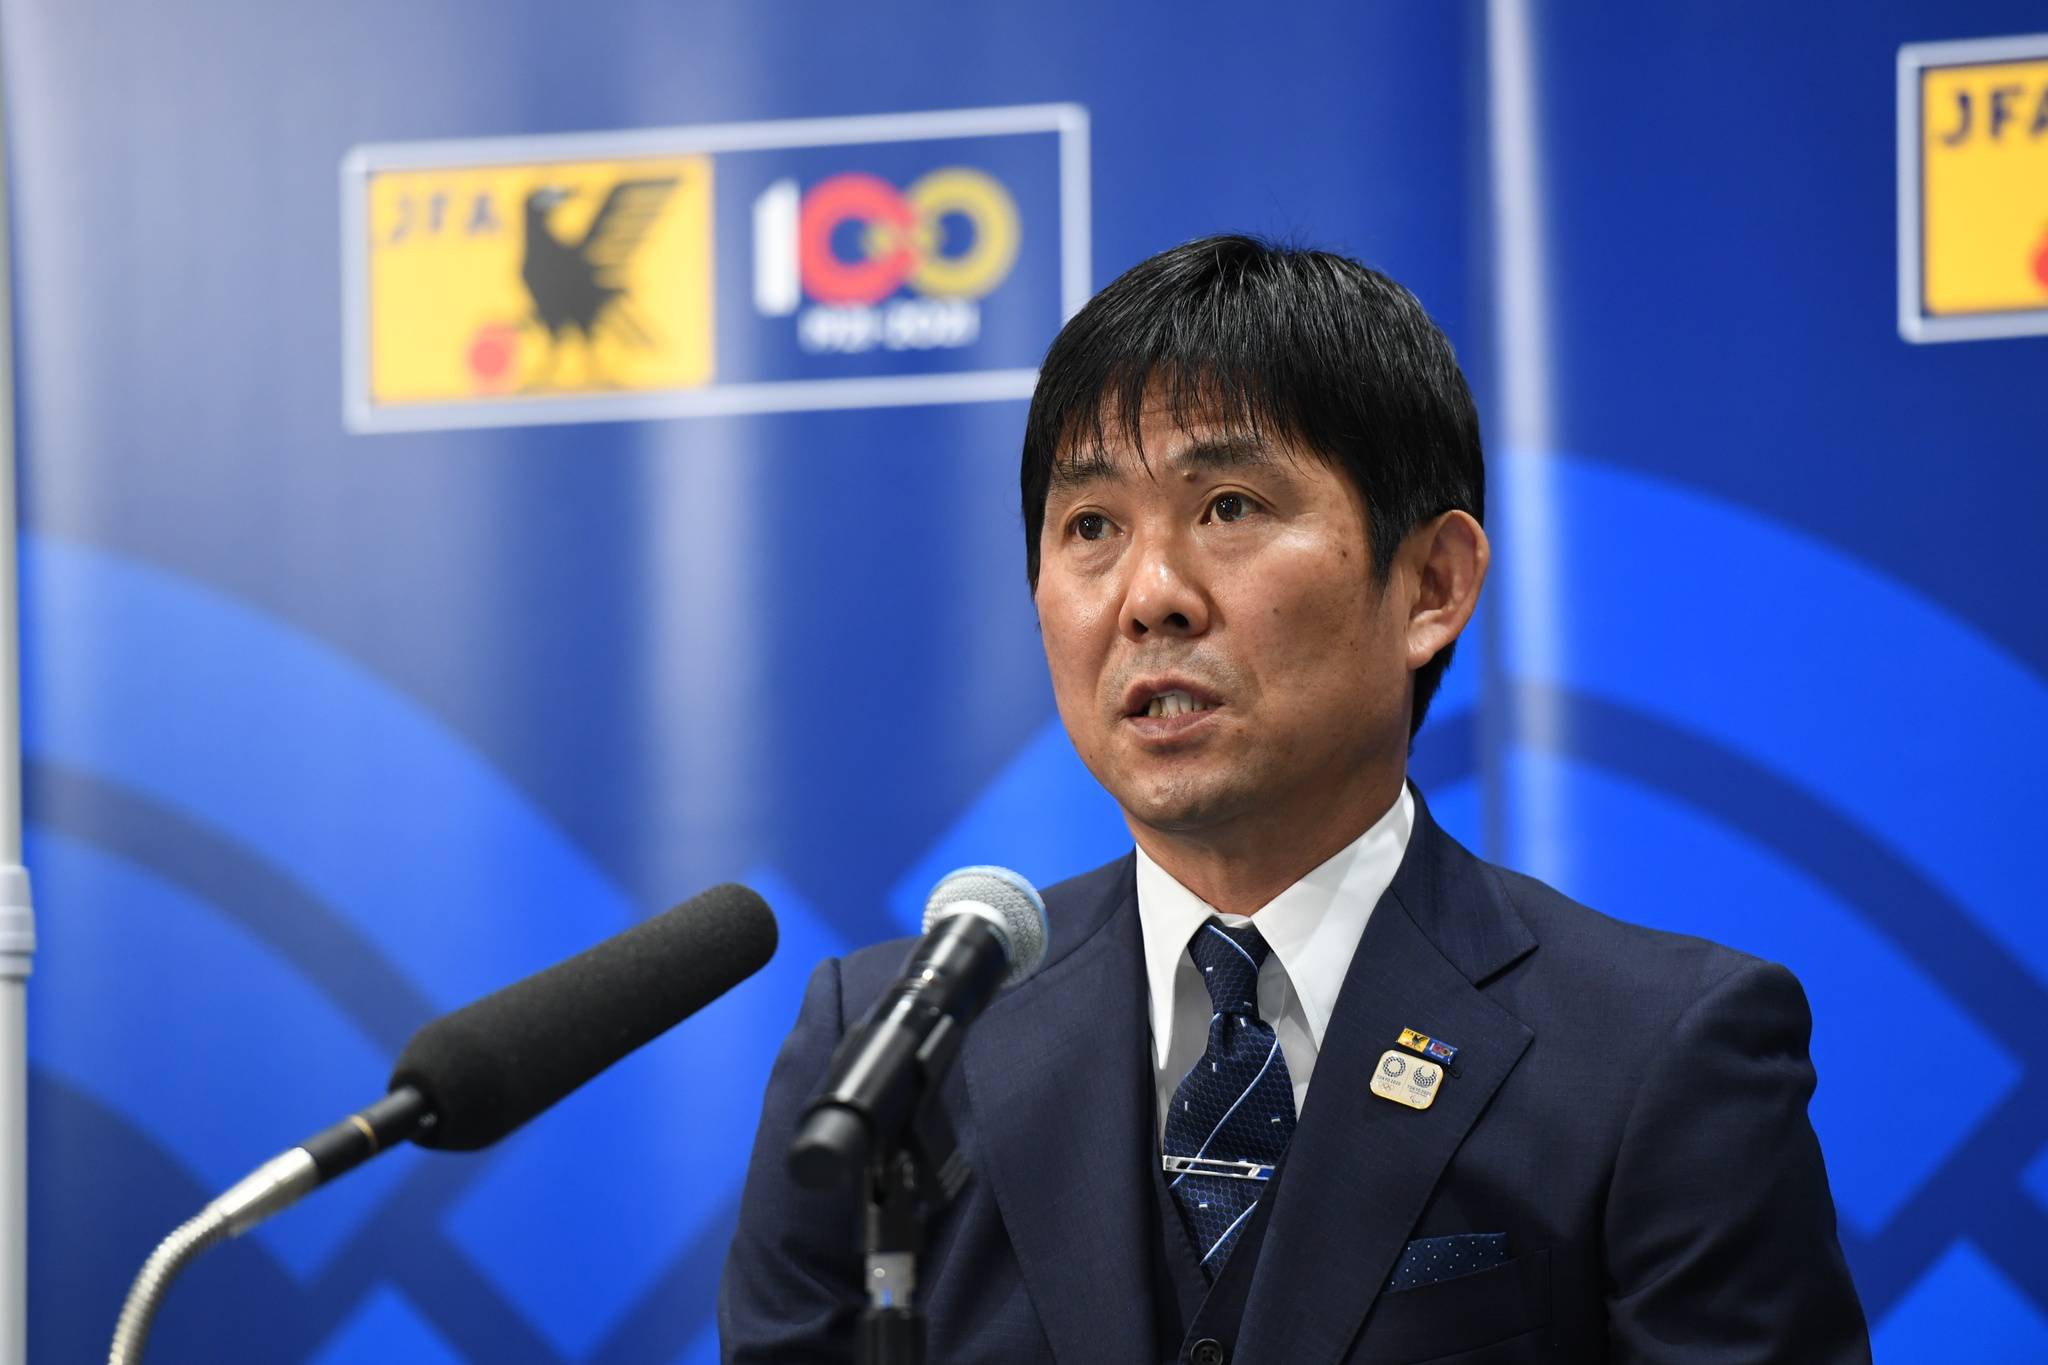 Hajime Moriyasu looks to Europe-based players for Olympic soccer success |  The Japan Times